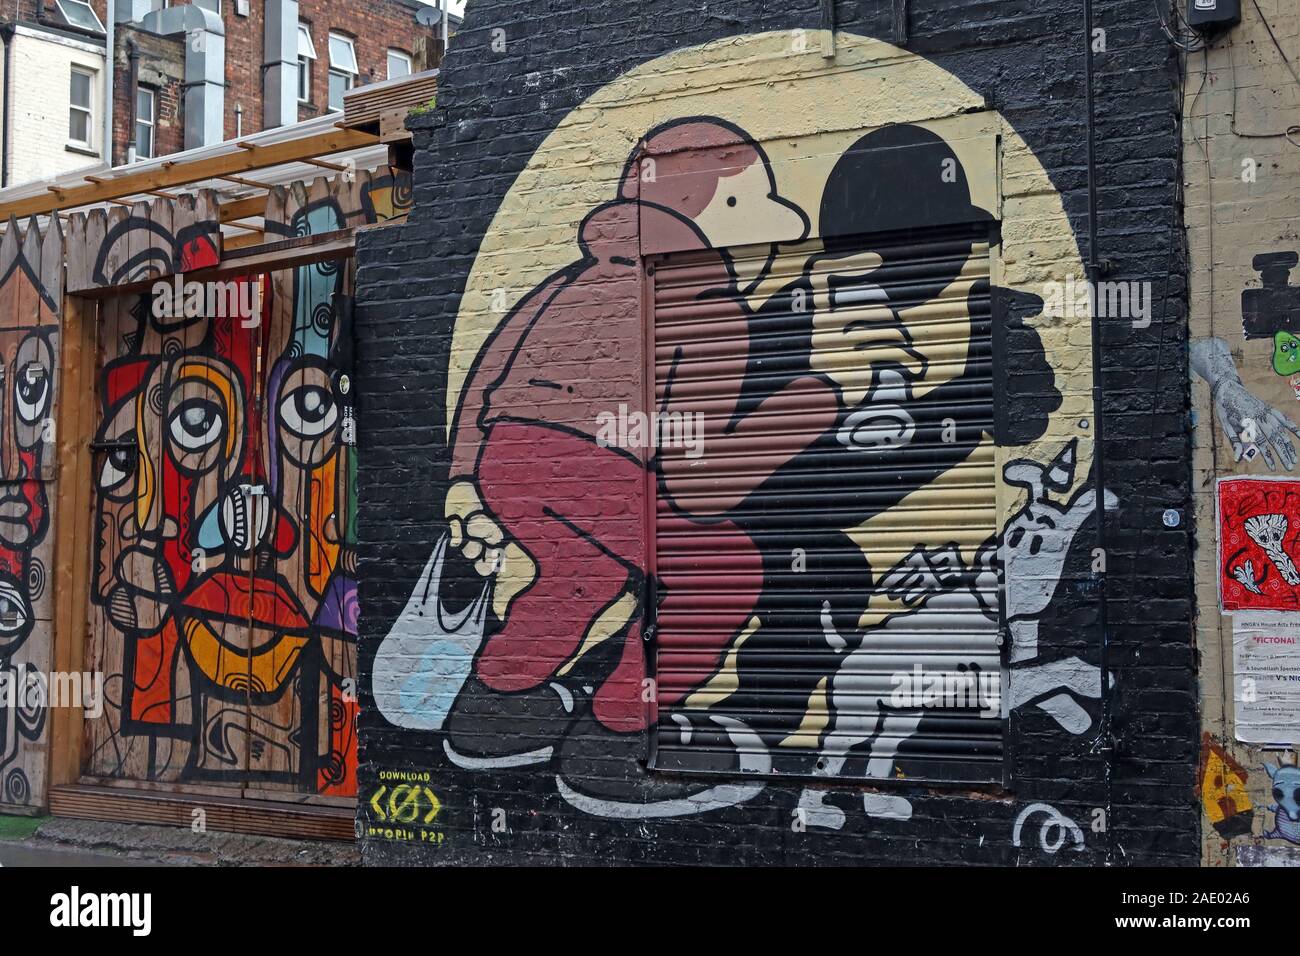 Hanbury St, Brick Lane, Kunst und Graffiti, Shoreditch, Tower Hamlets, East End, London, Südosten, England, Großbritannien, E1 6QL Stockfoto